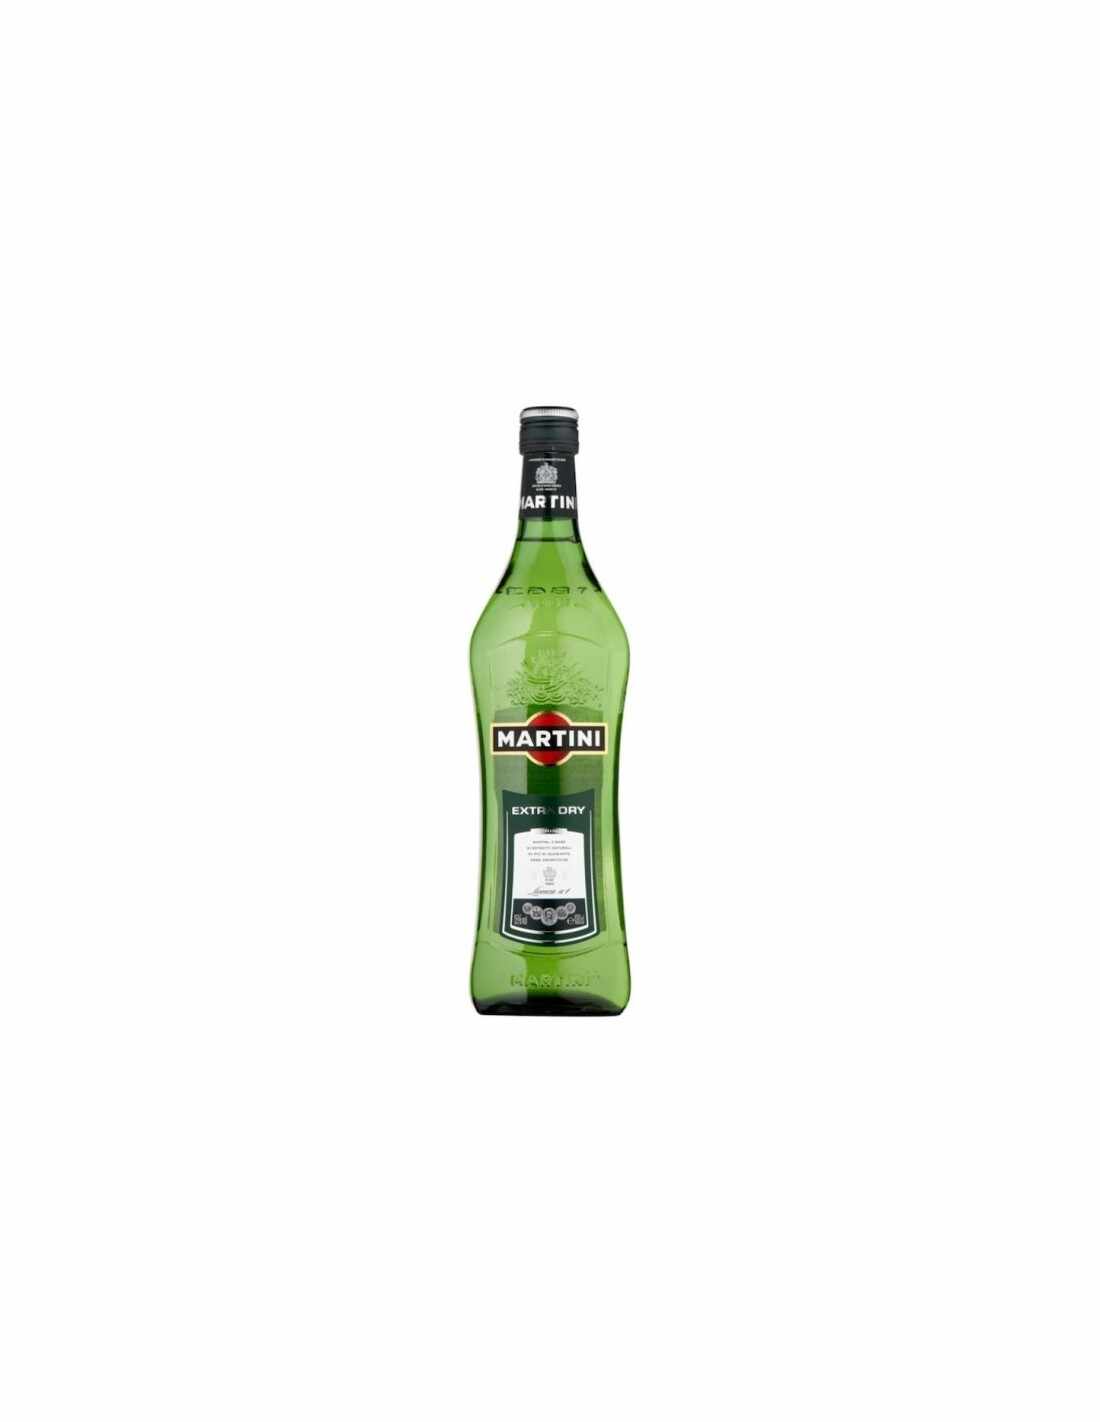 Aperitiv Martini extra dry, 15% alc., 1L, Italia